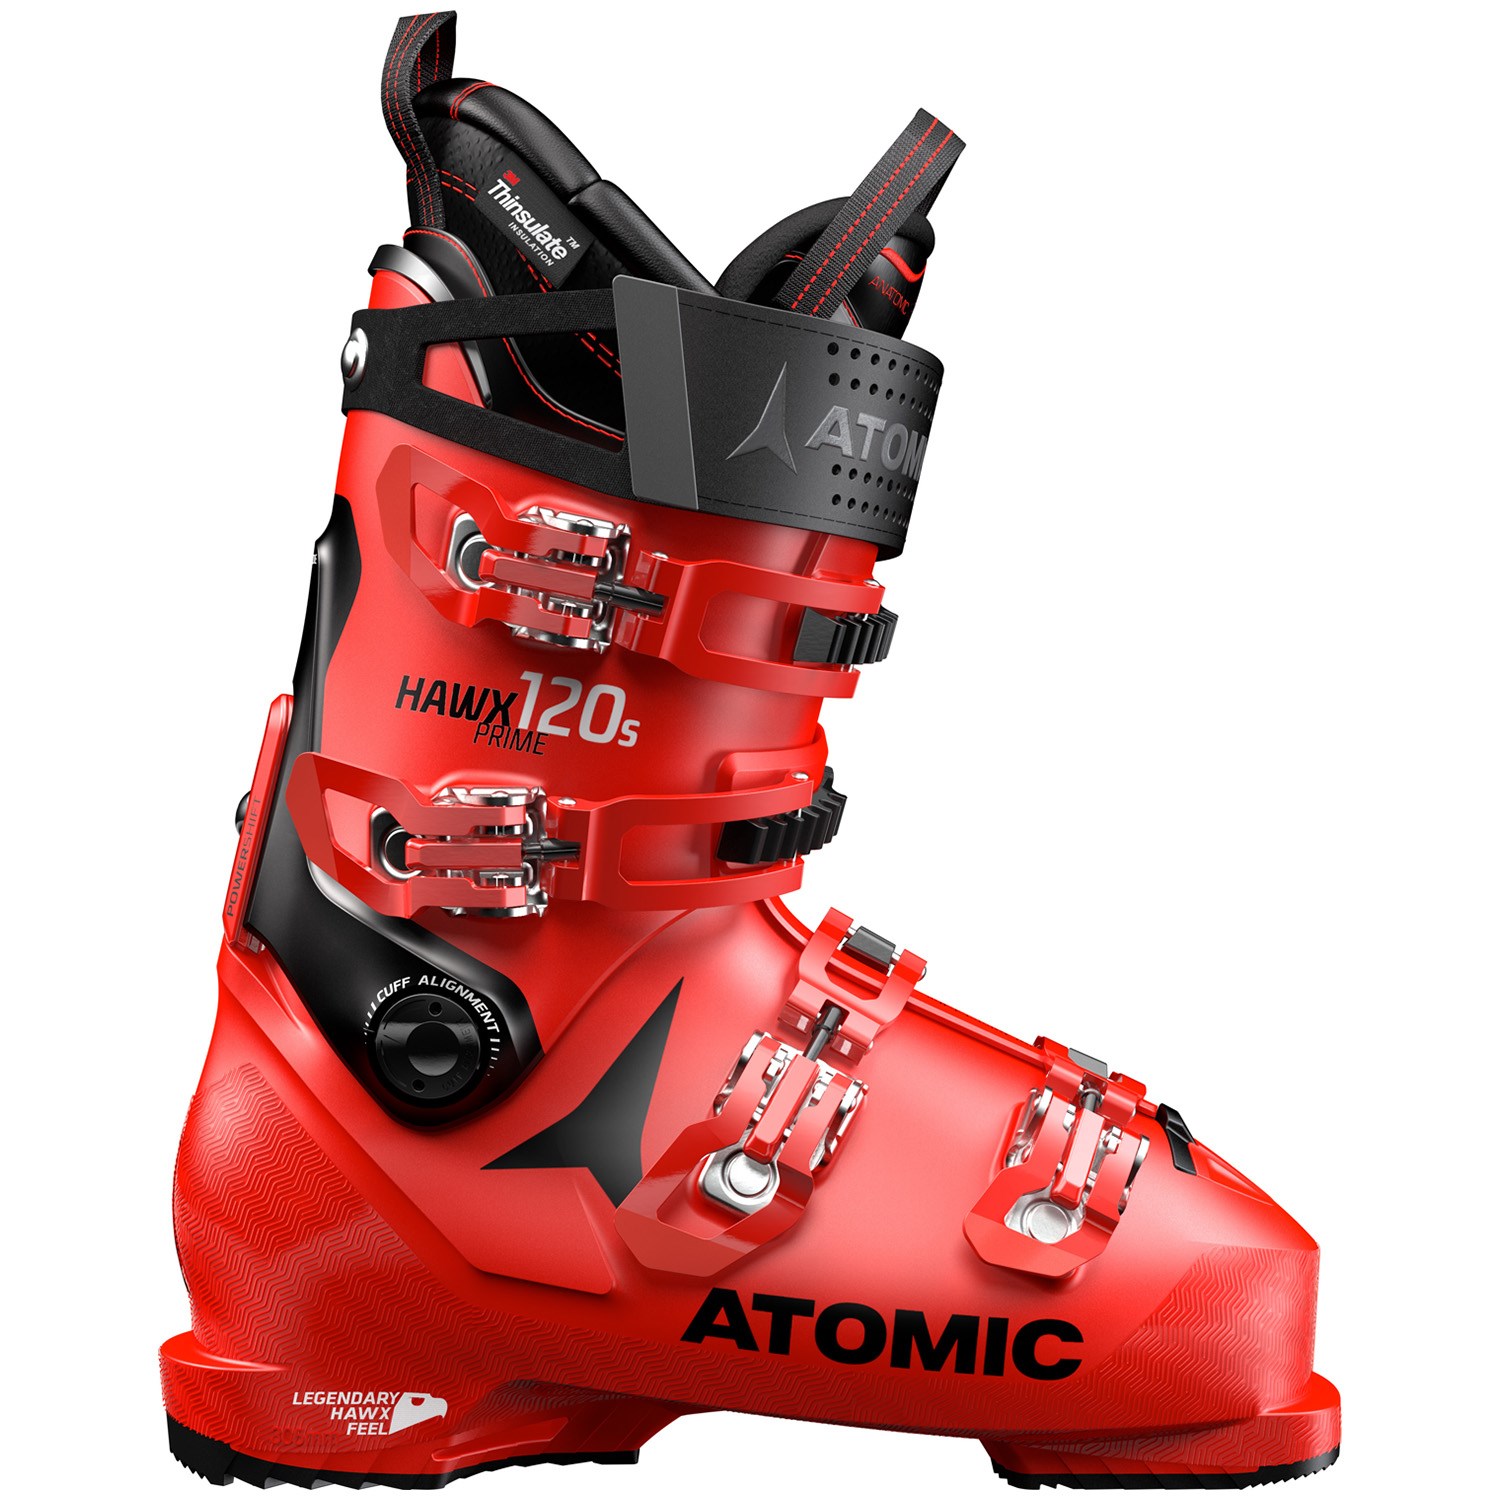 Aboard girl for Atomic Hawx Prime 120 S Ski Boots 2019 | evo